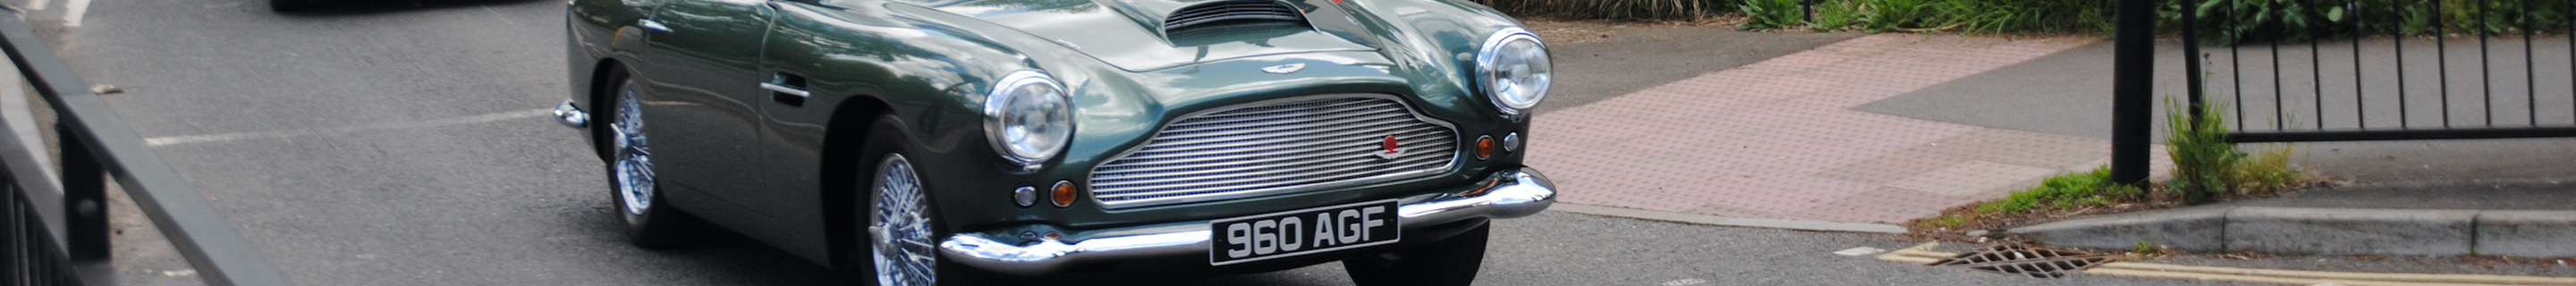 Aston Martin DB4 Series II